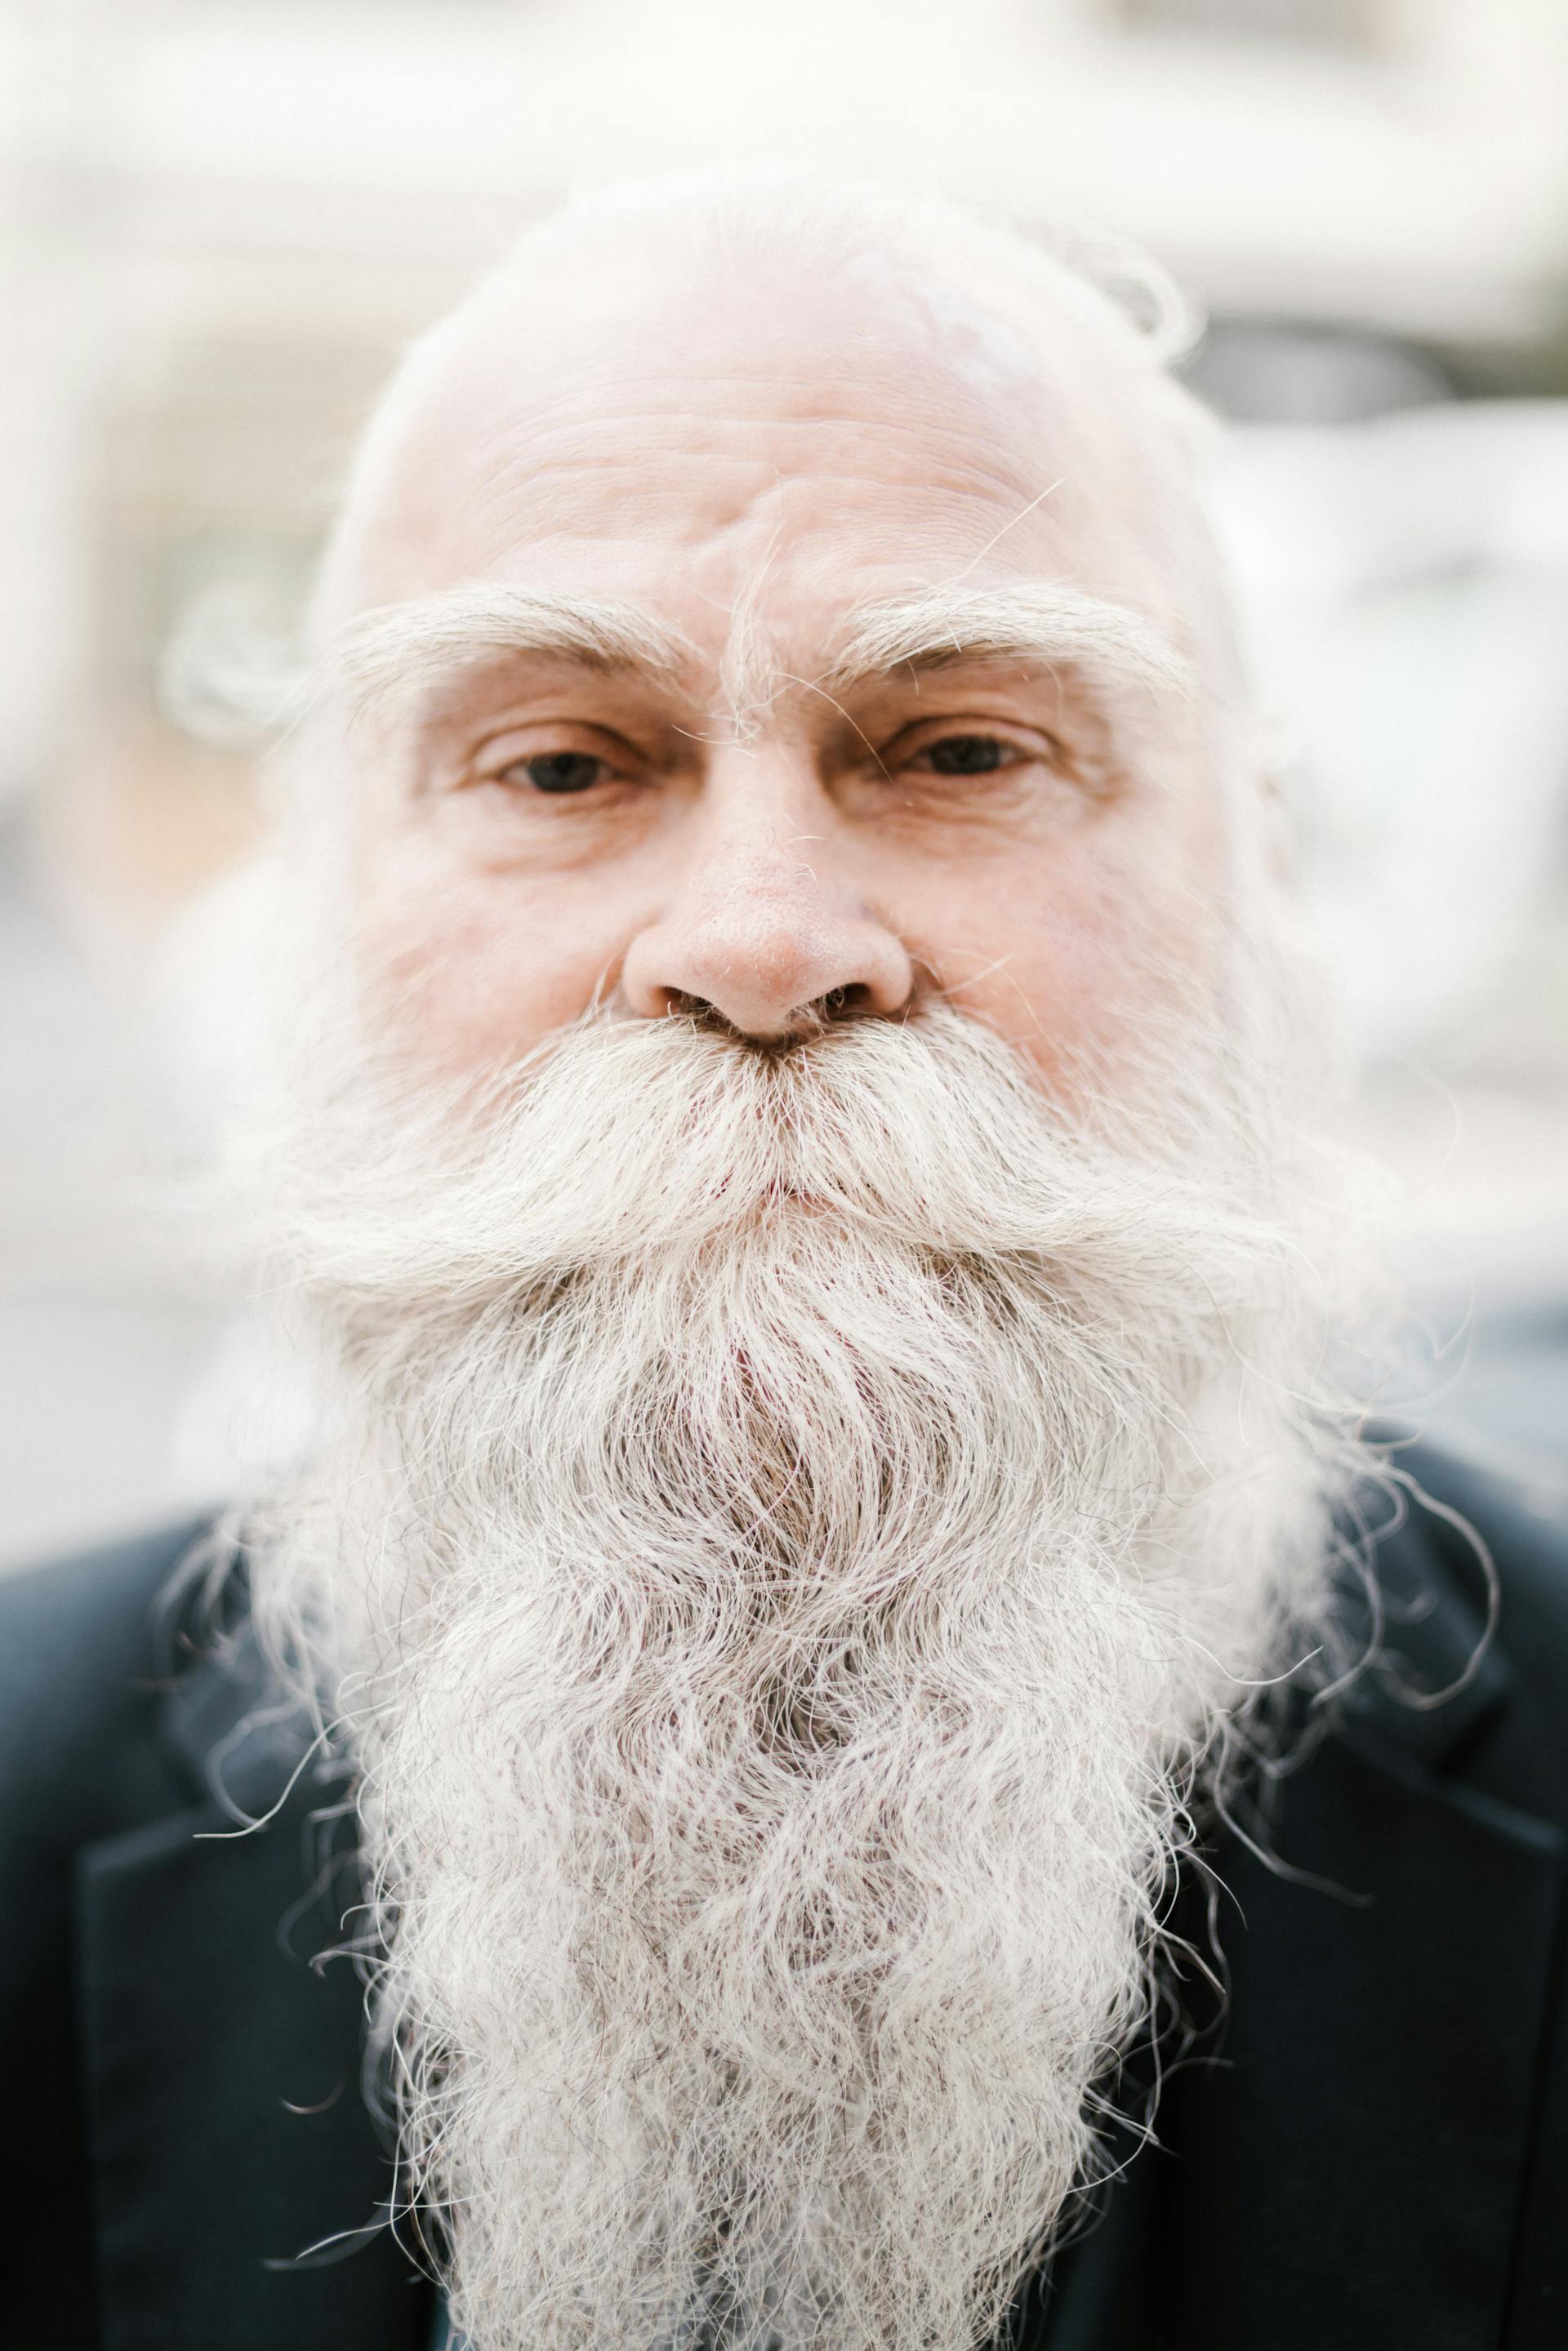 A serious-looking older man | Source: Pexels